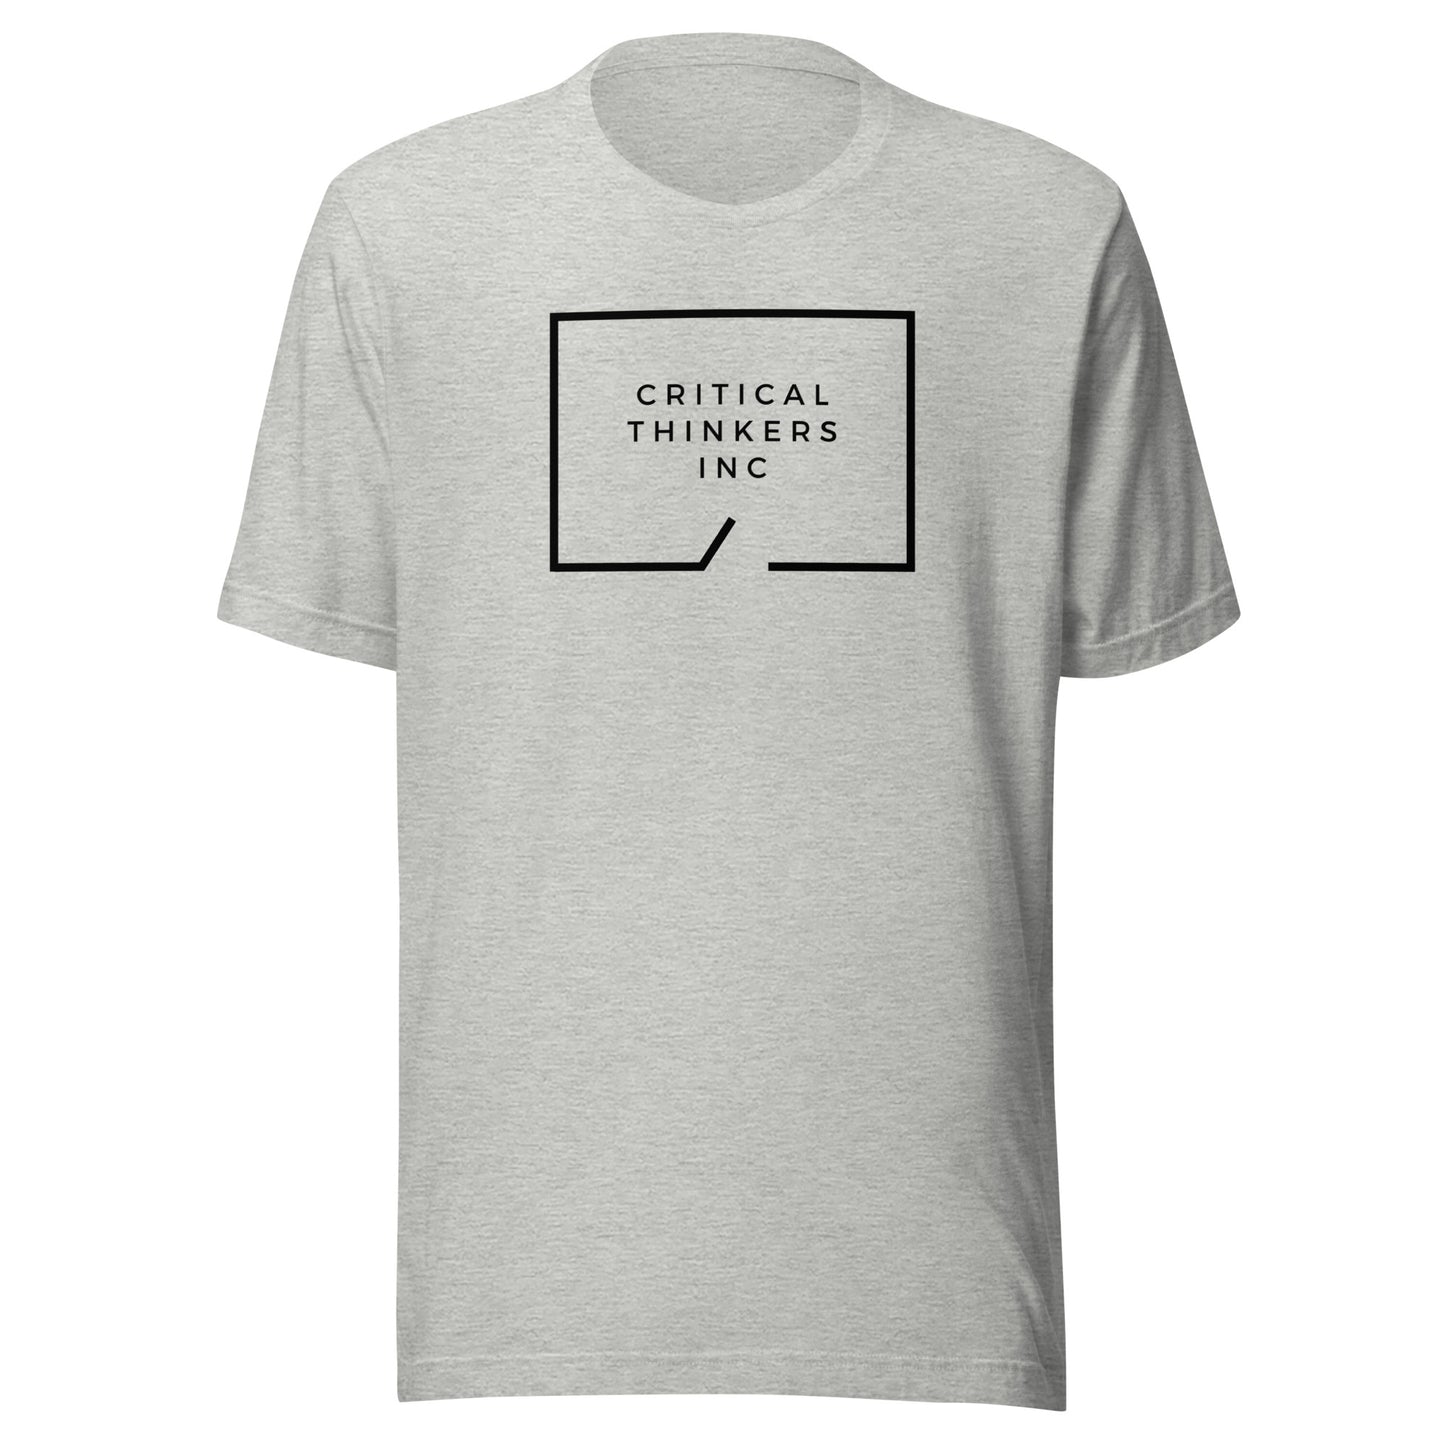 Center Fed, Critical Thinkers Inc. T-shirt